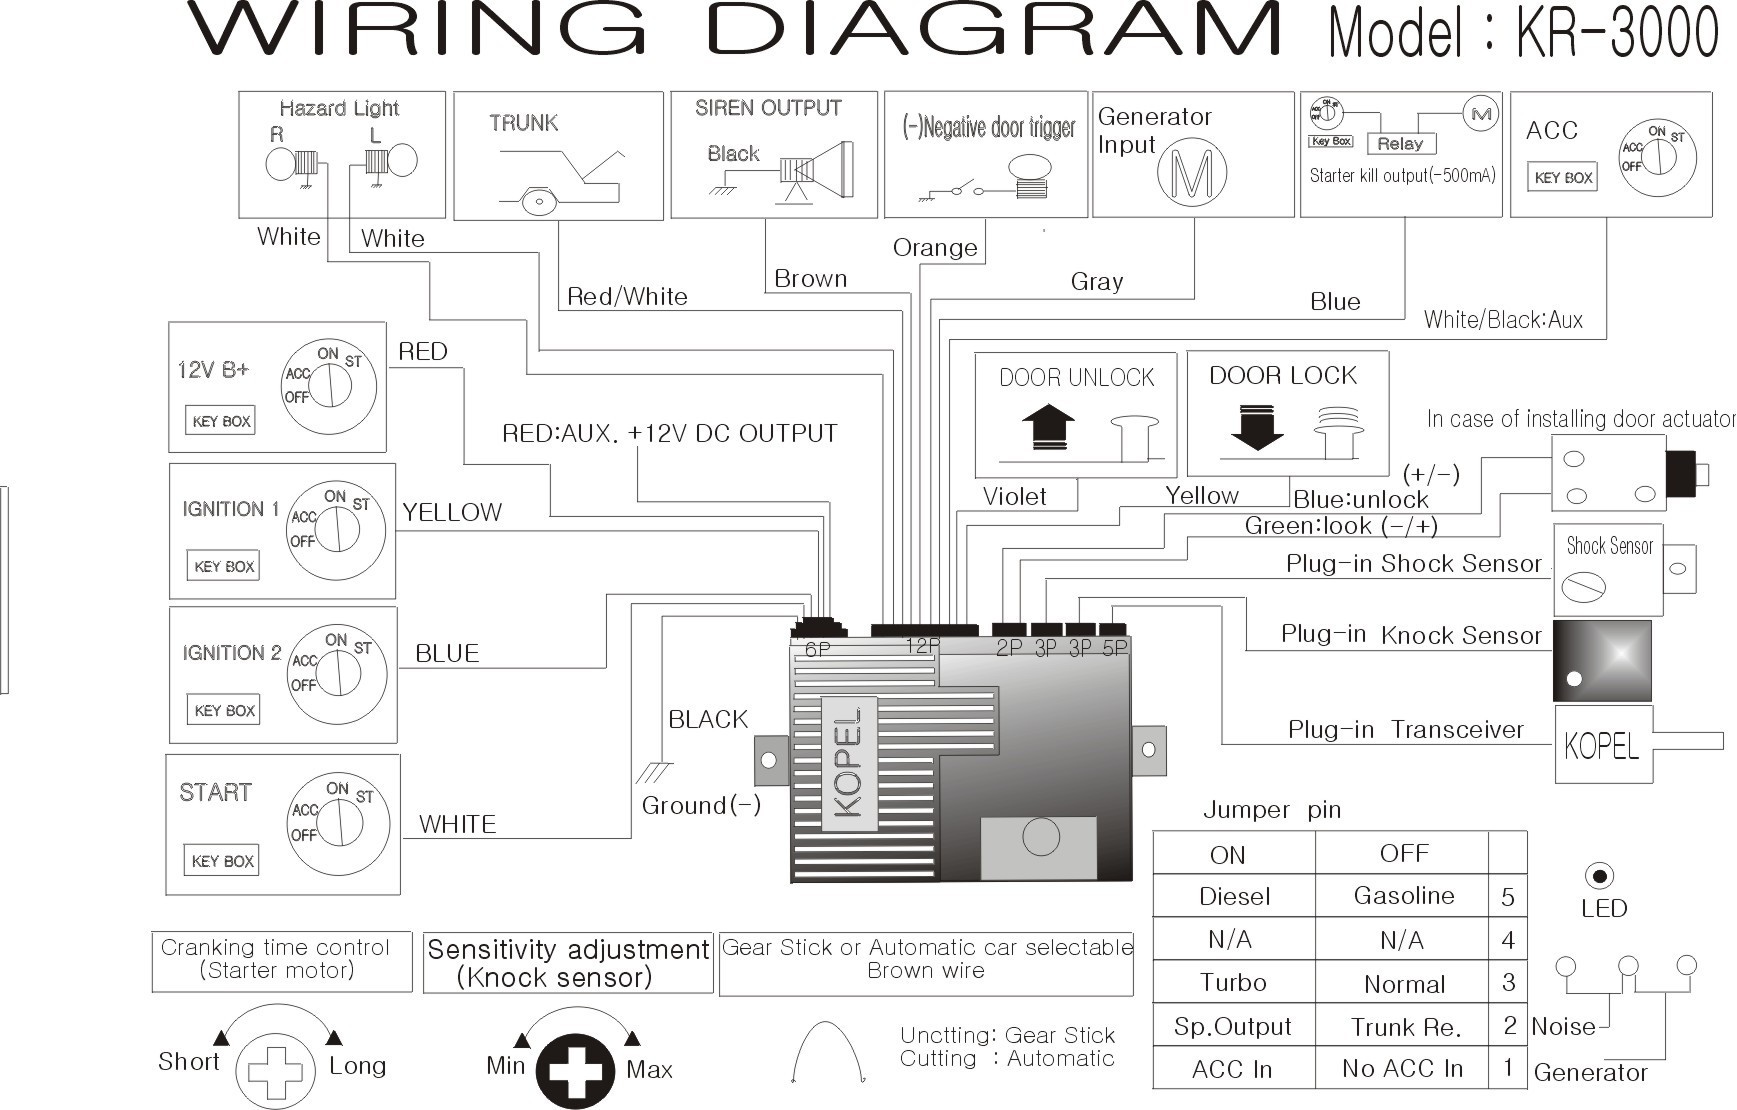 Bulldog Car Wiring Diagrams Wiring Diagram Alarm Motor Fresh Vehicle Wiring Diagrams for Alarms Of Bulldog Car Wiring Diagrams